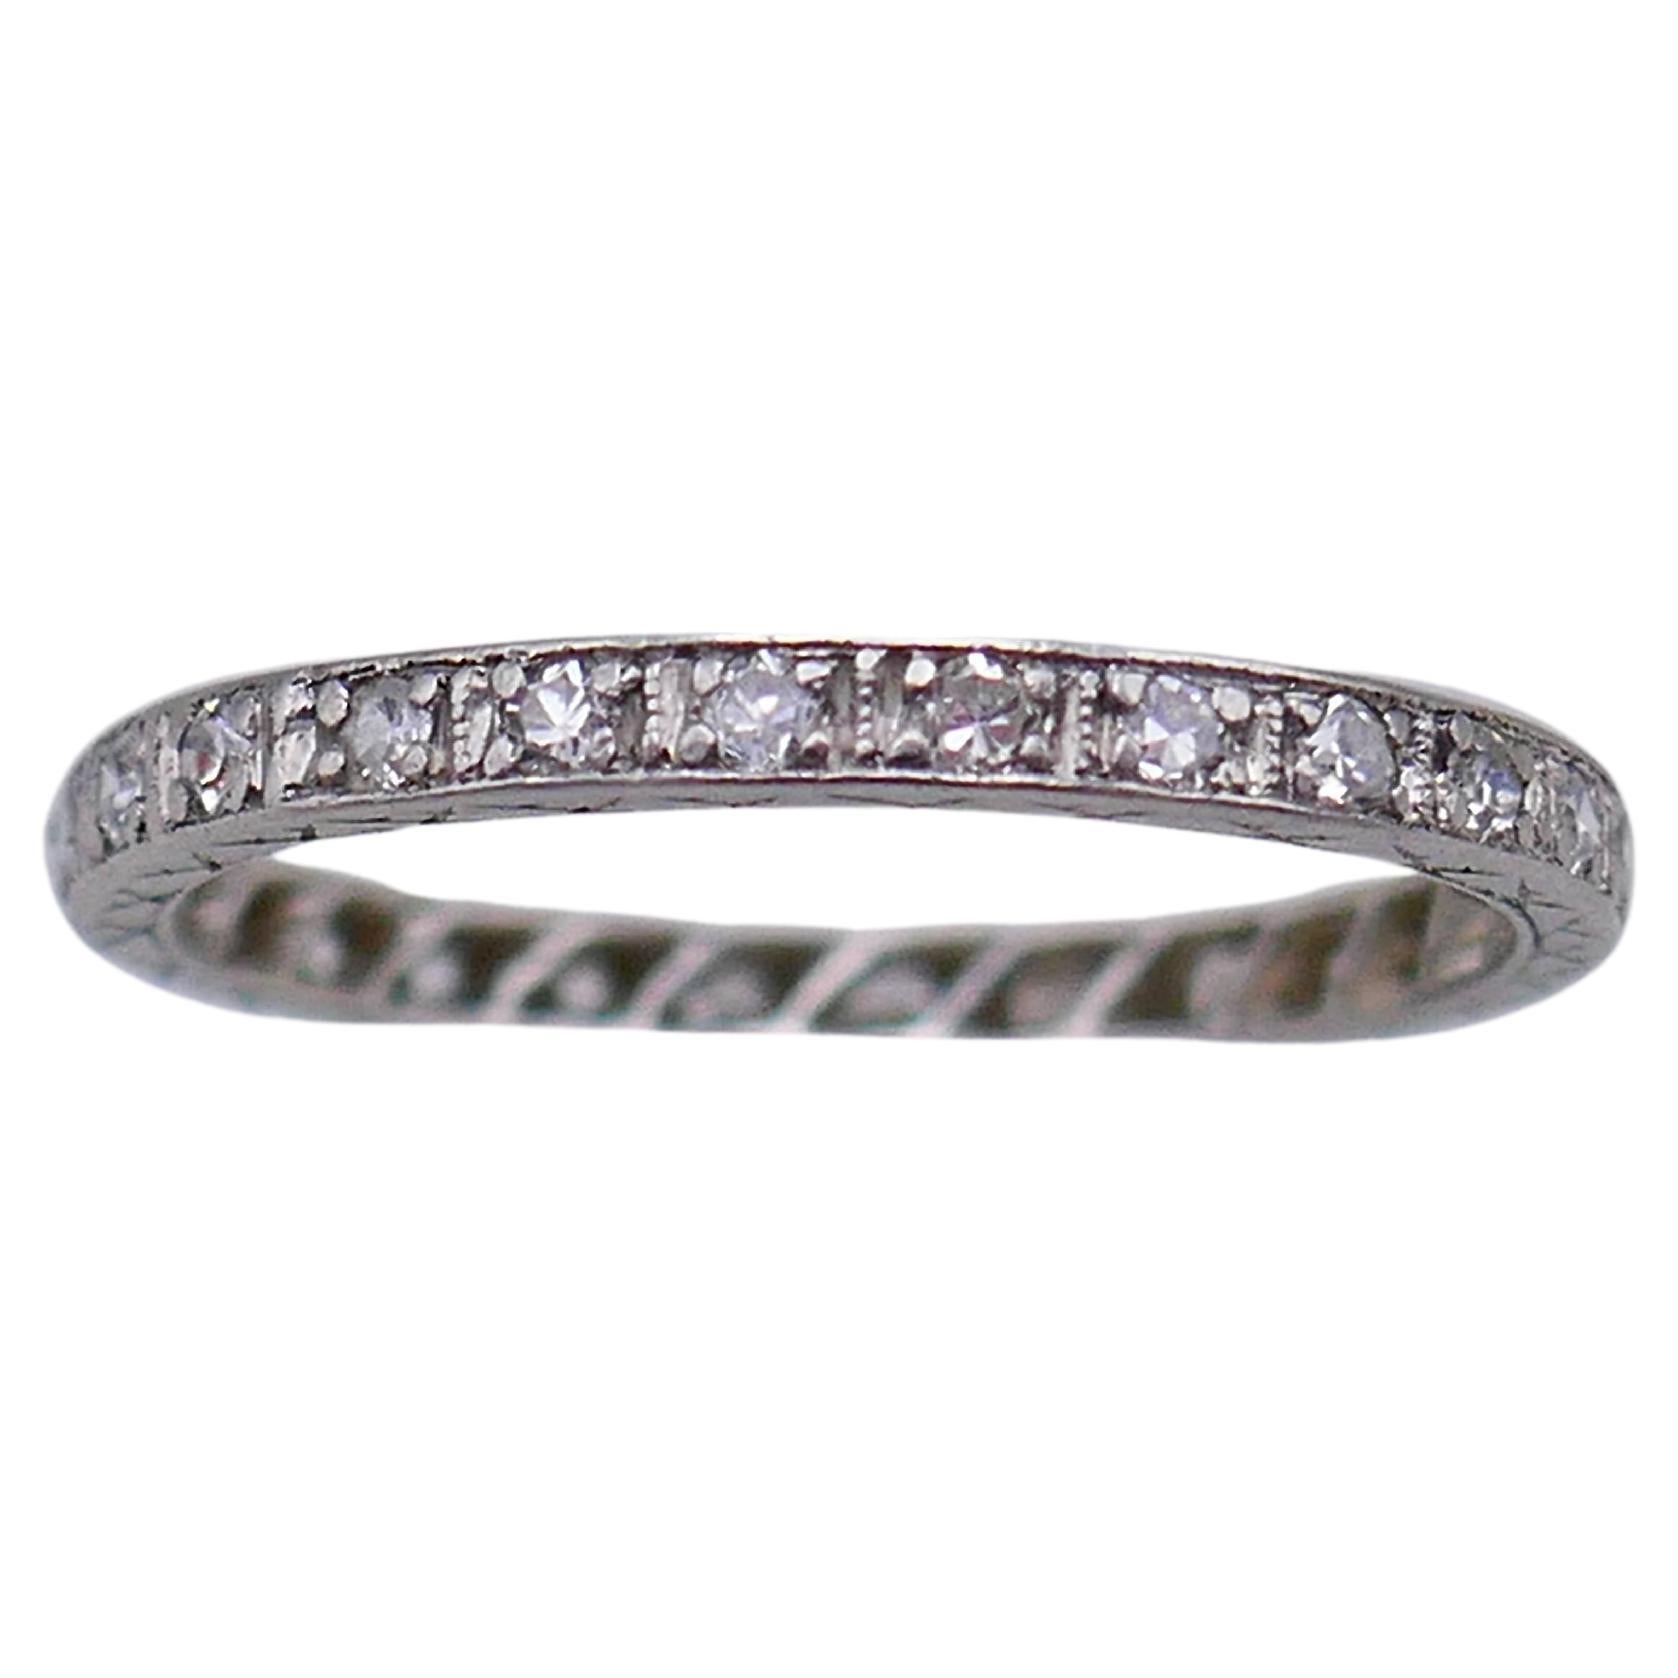 Art Deco 0.26 Carat Diamond Platinum Band Ring